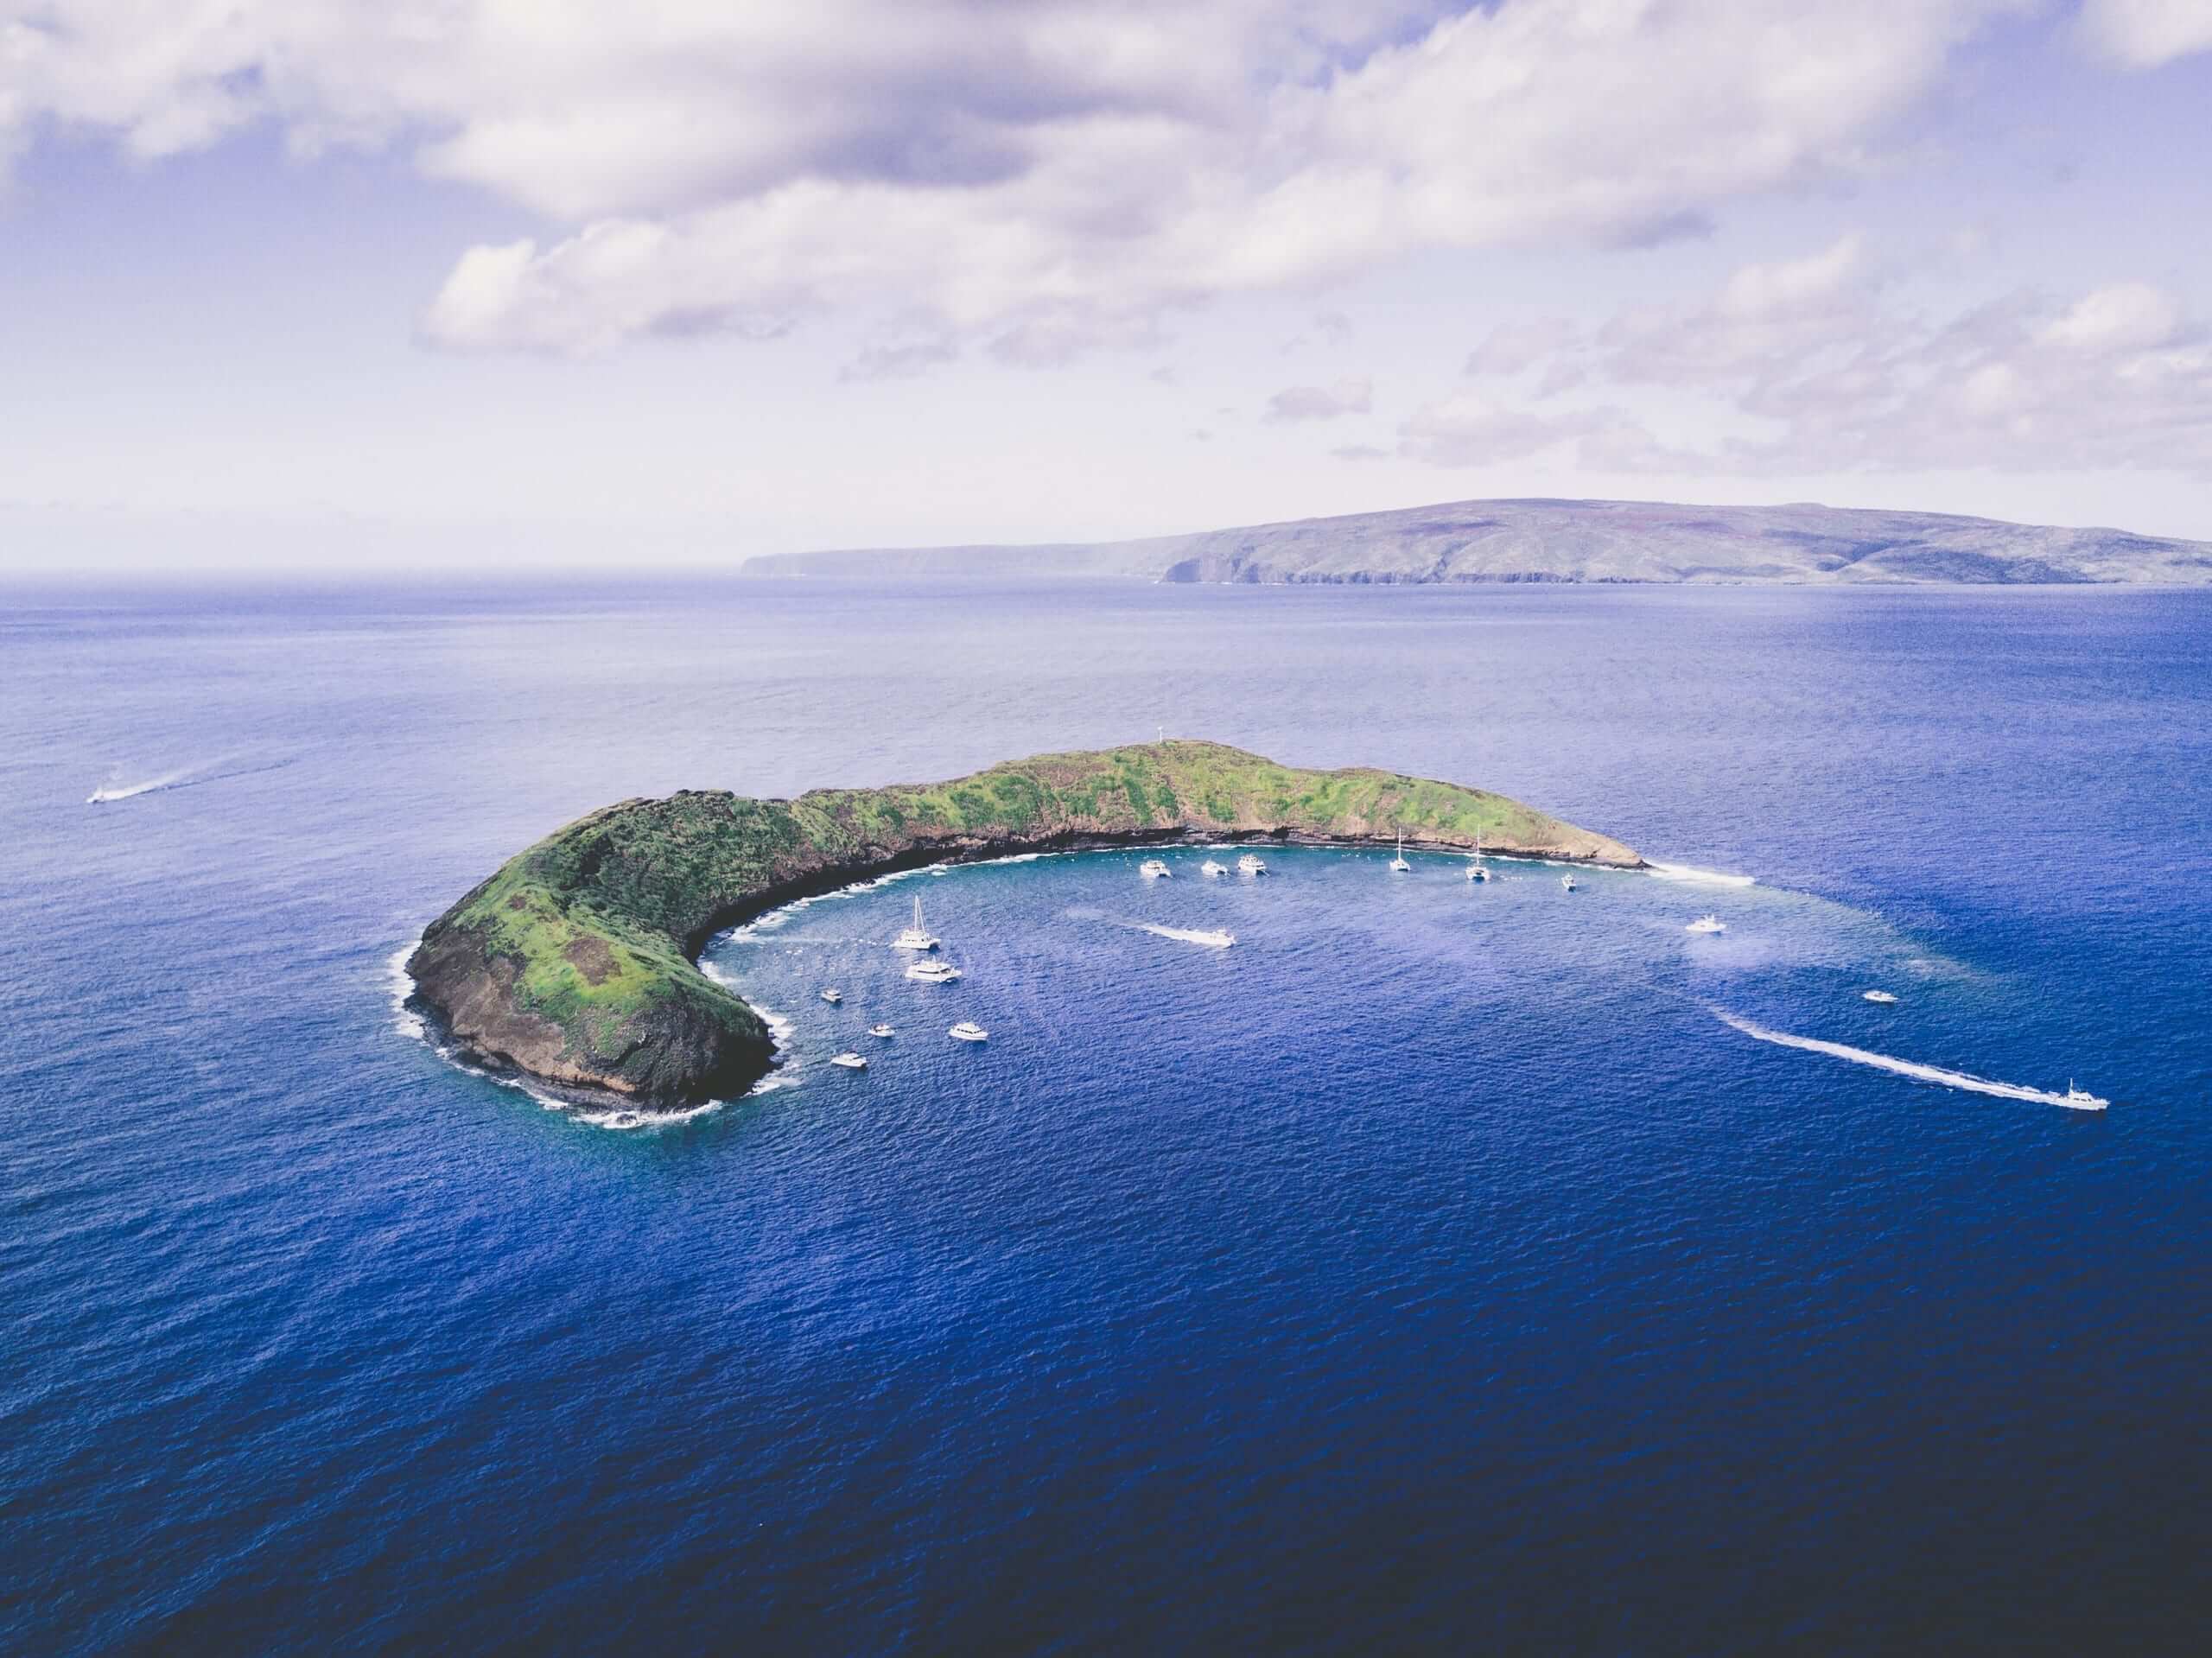 Maui Snorkeling